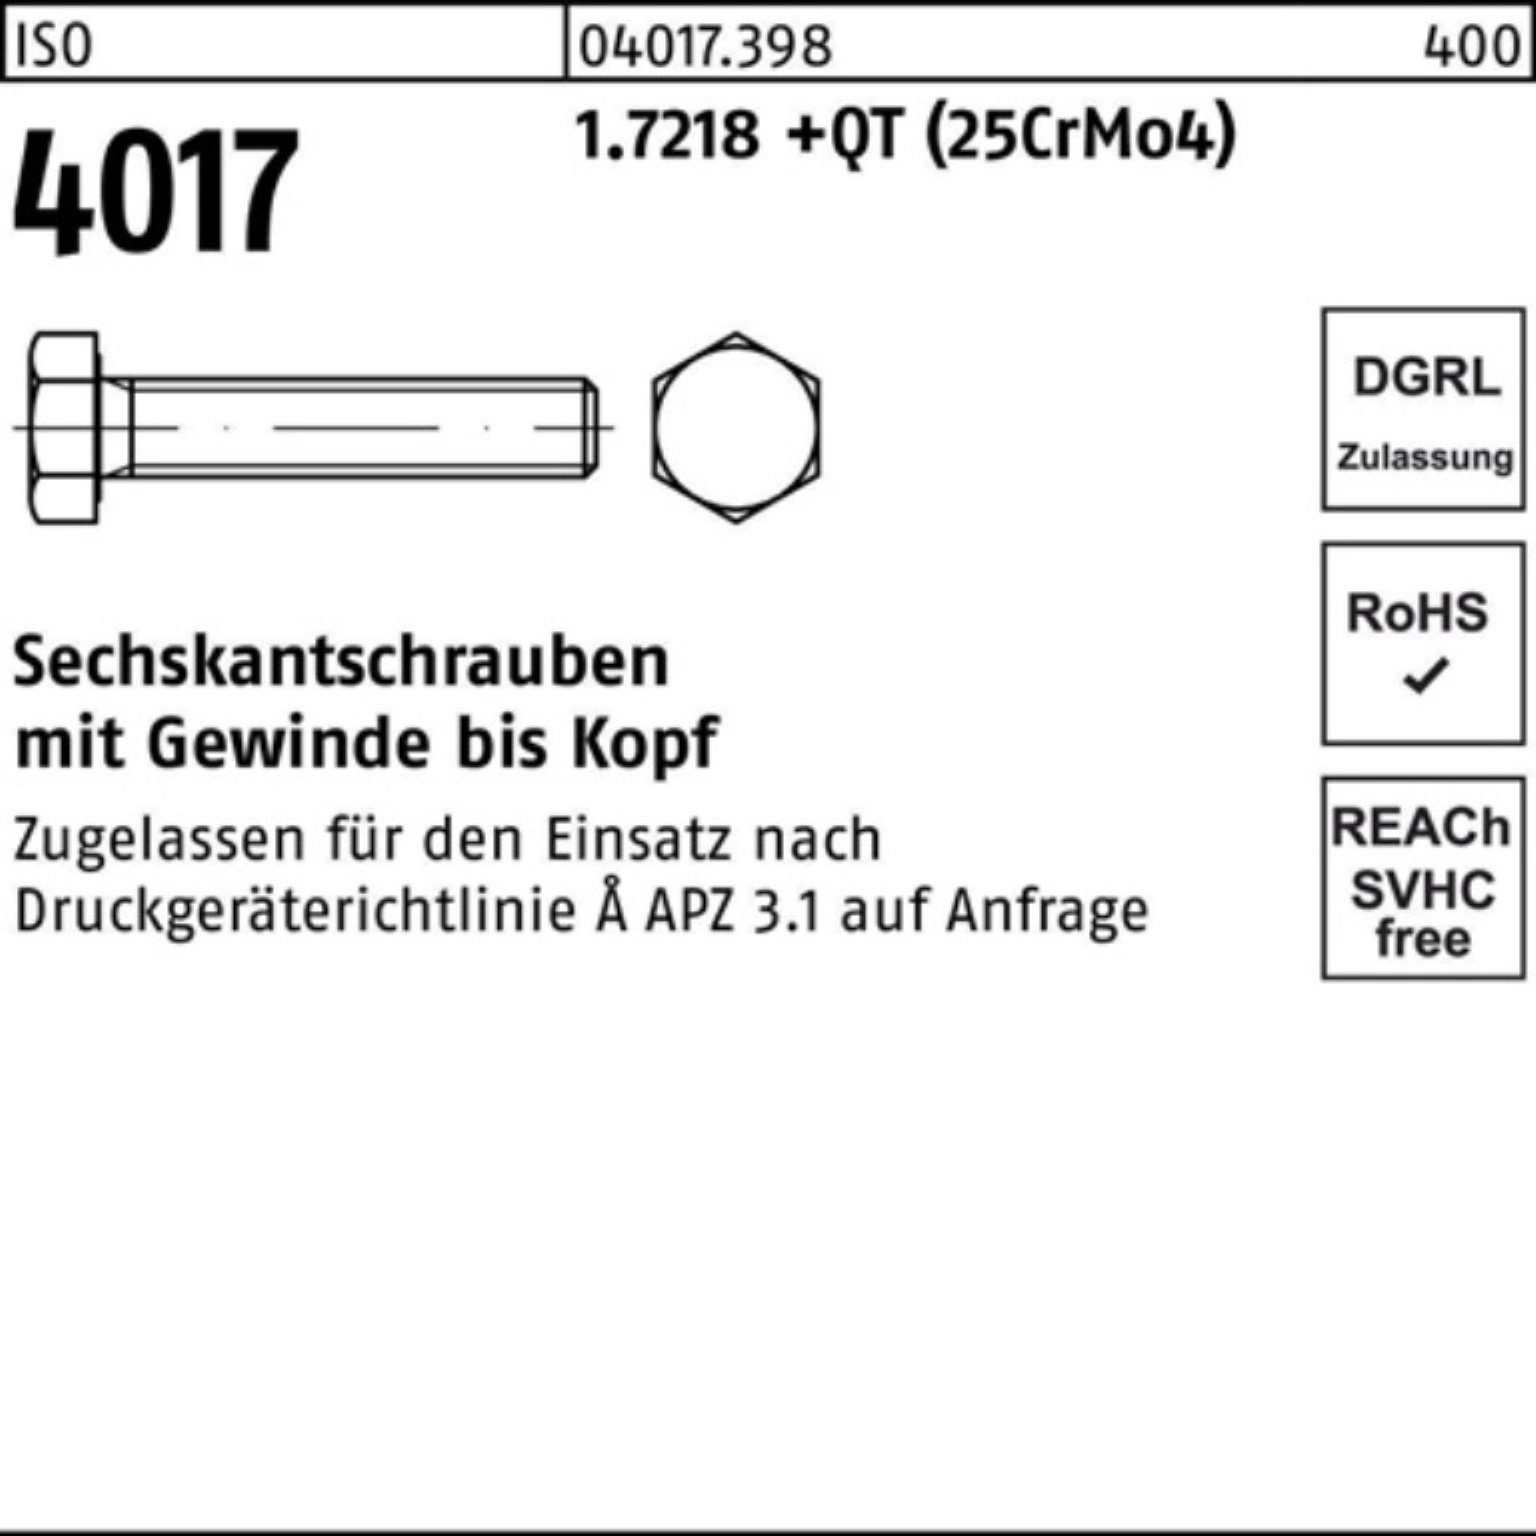 ISO 160 M20x 1.7218 4017 Pack (25CrMo4) Bufab +QT Sechskantschraube Sechskantschraube 100er VG